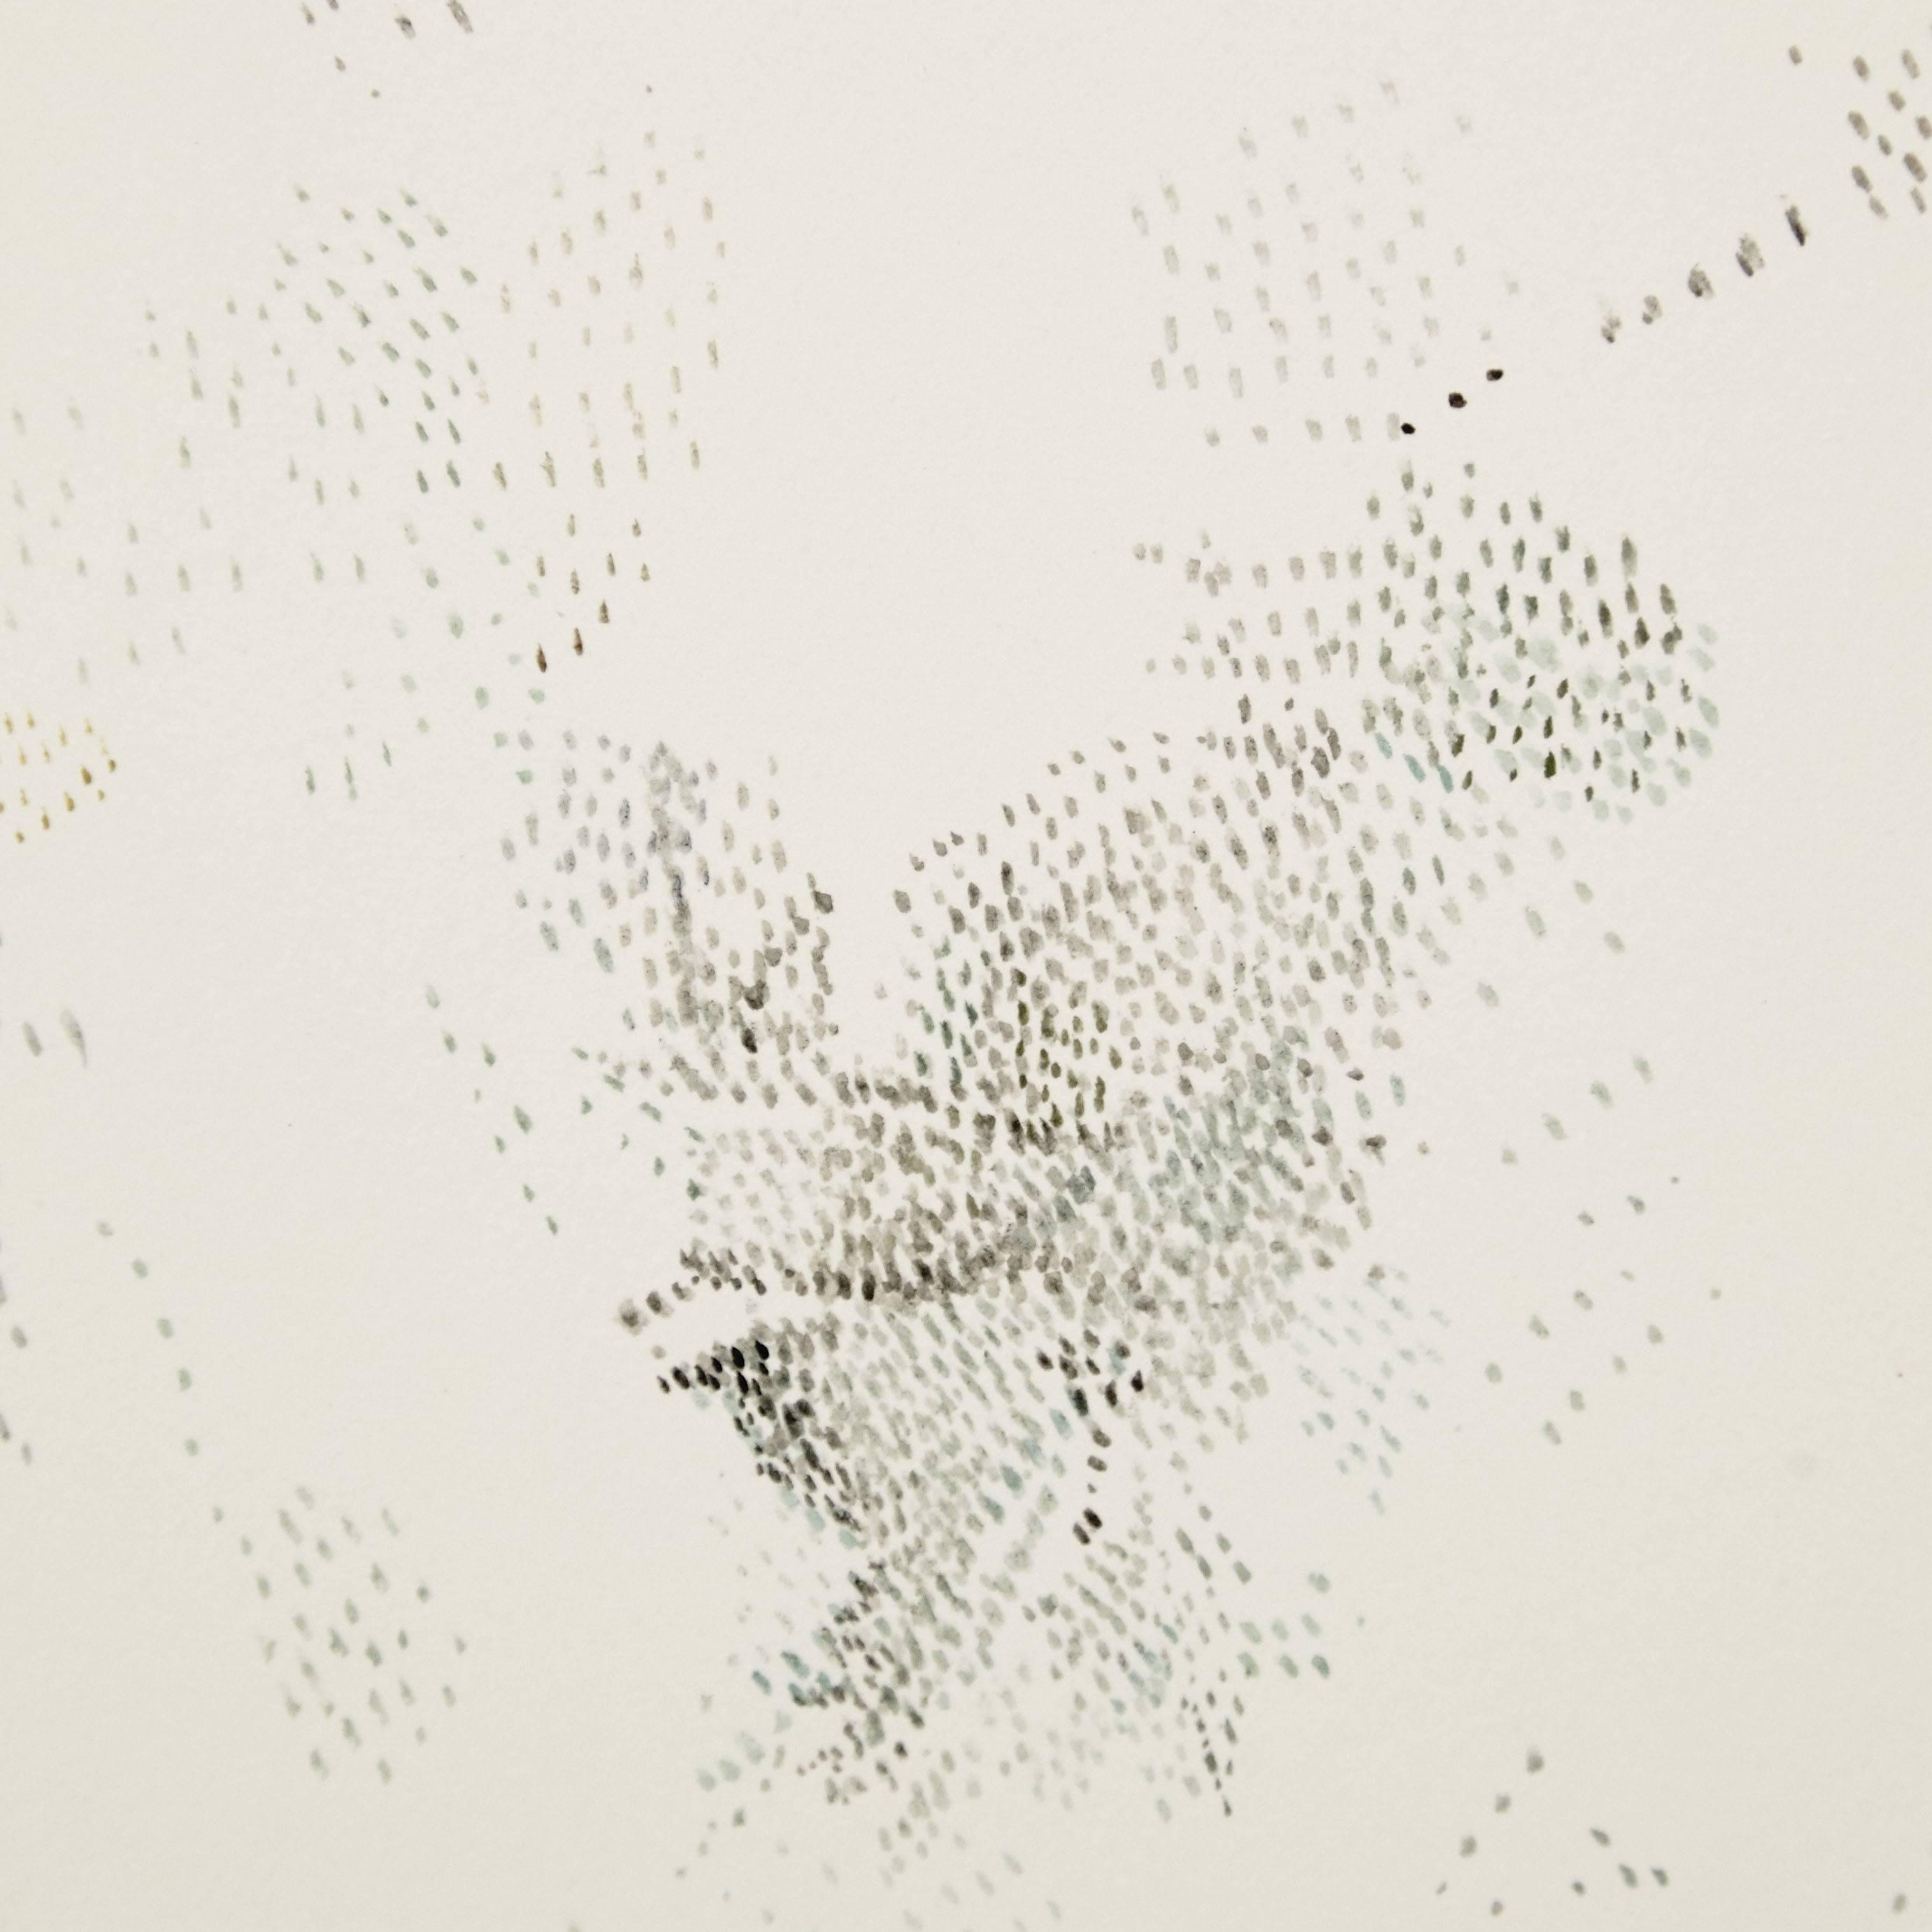 Mid-Century Modern Dora Maar Pontillist Abstract Drawing on Paper